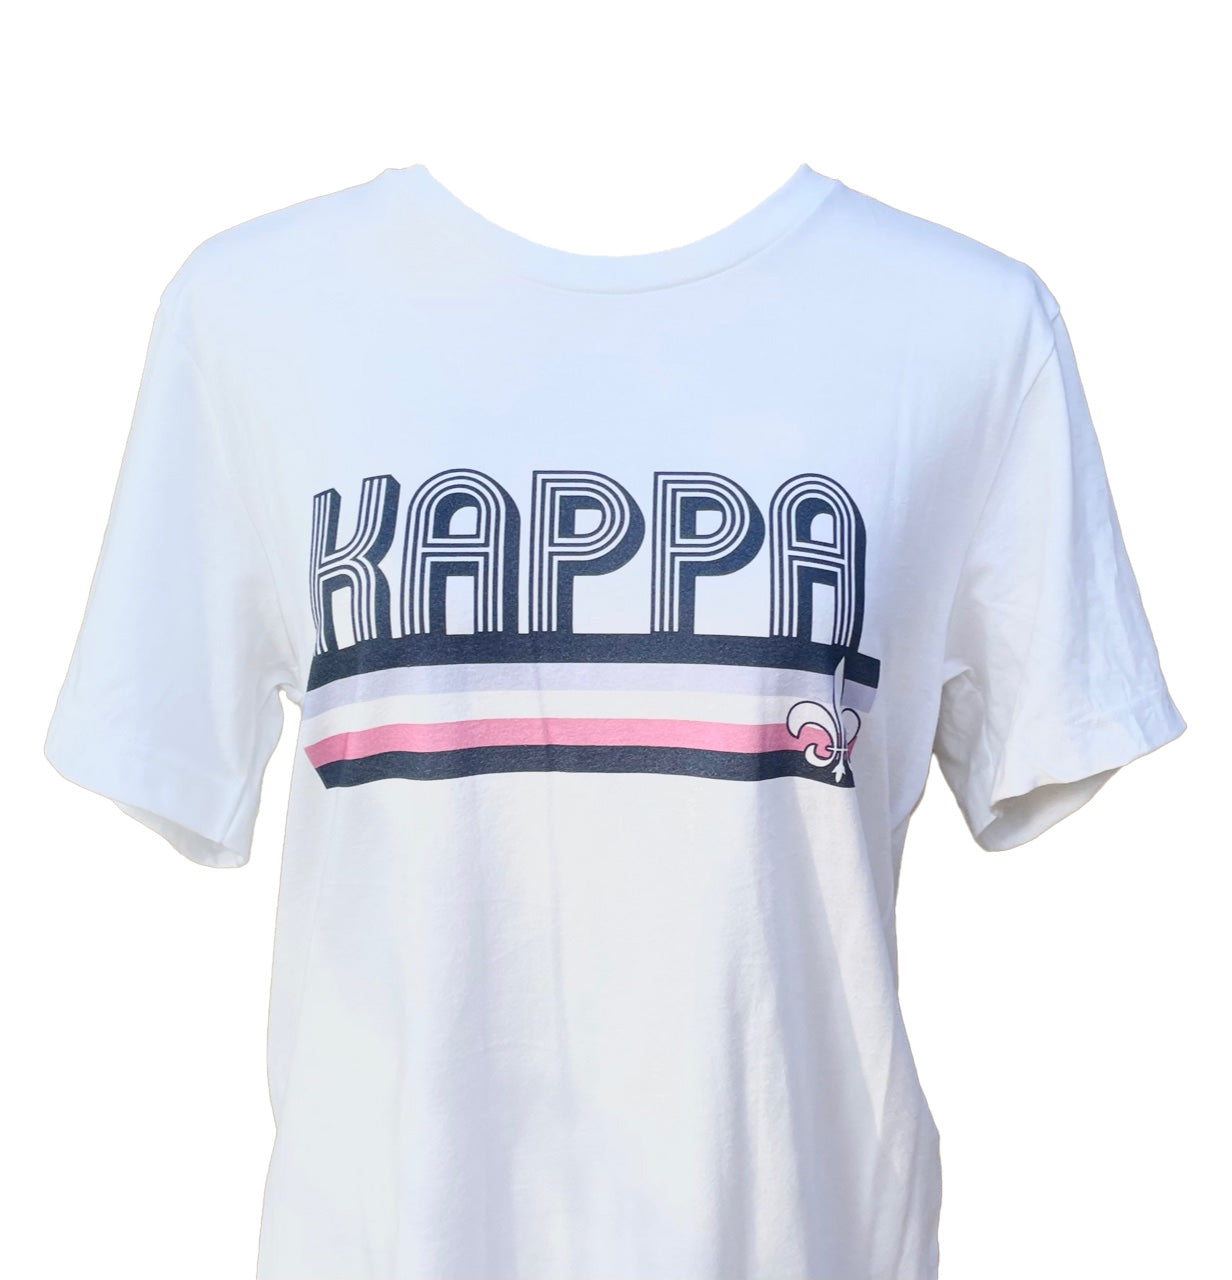 Kappa Kappa Gamma White Short Sleeve T-shirt